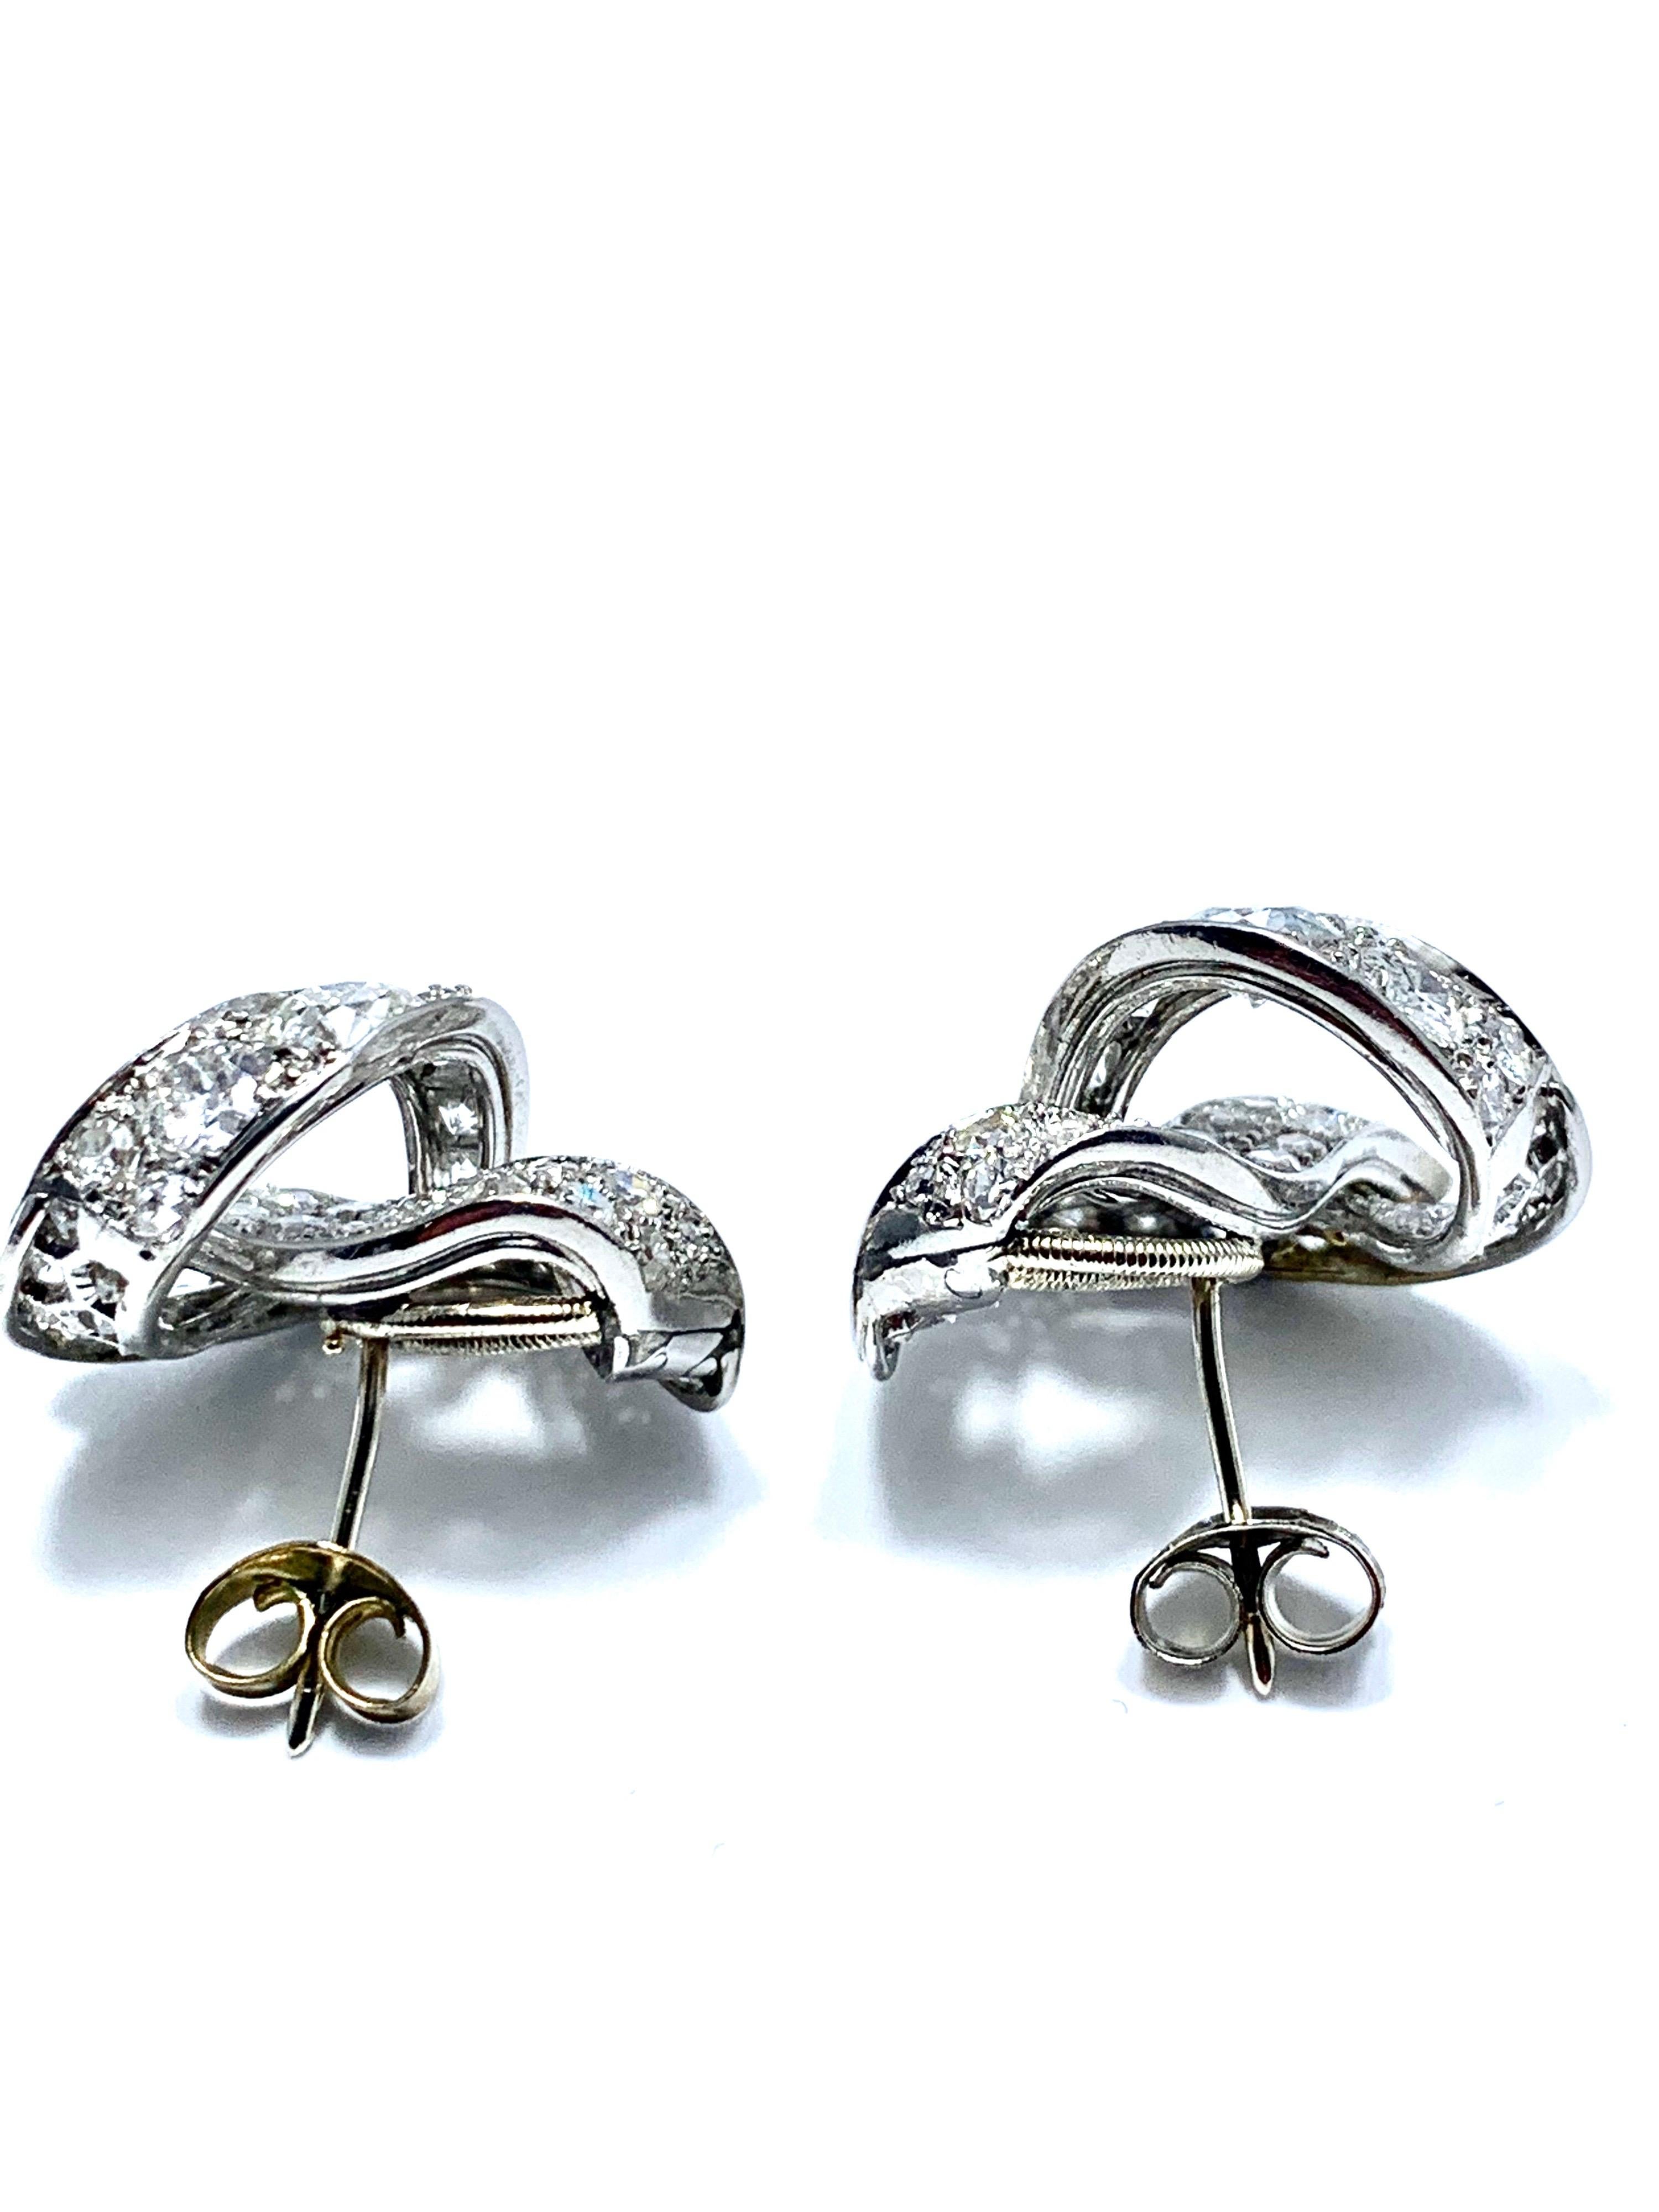 Art Deco 2.95 Carat Round Brilliant and Single Cut Diamond Twist Earrings For Sale